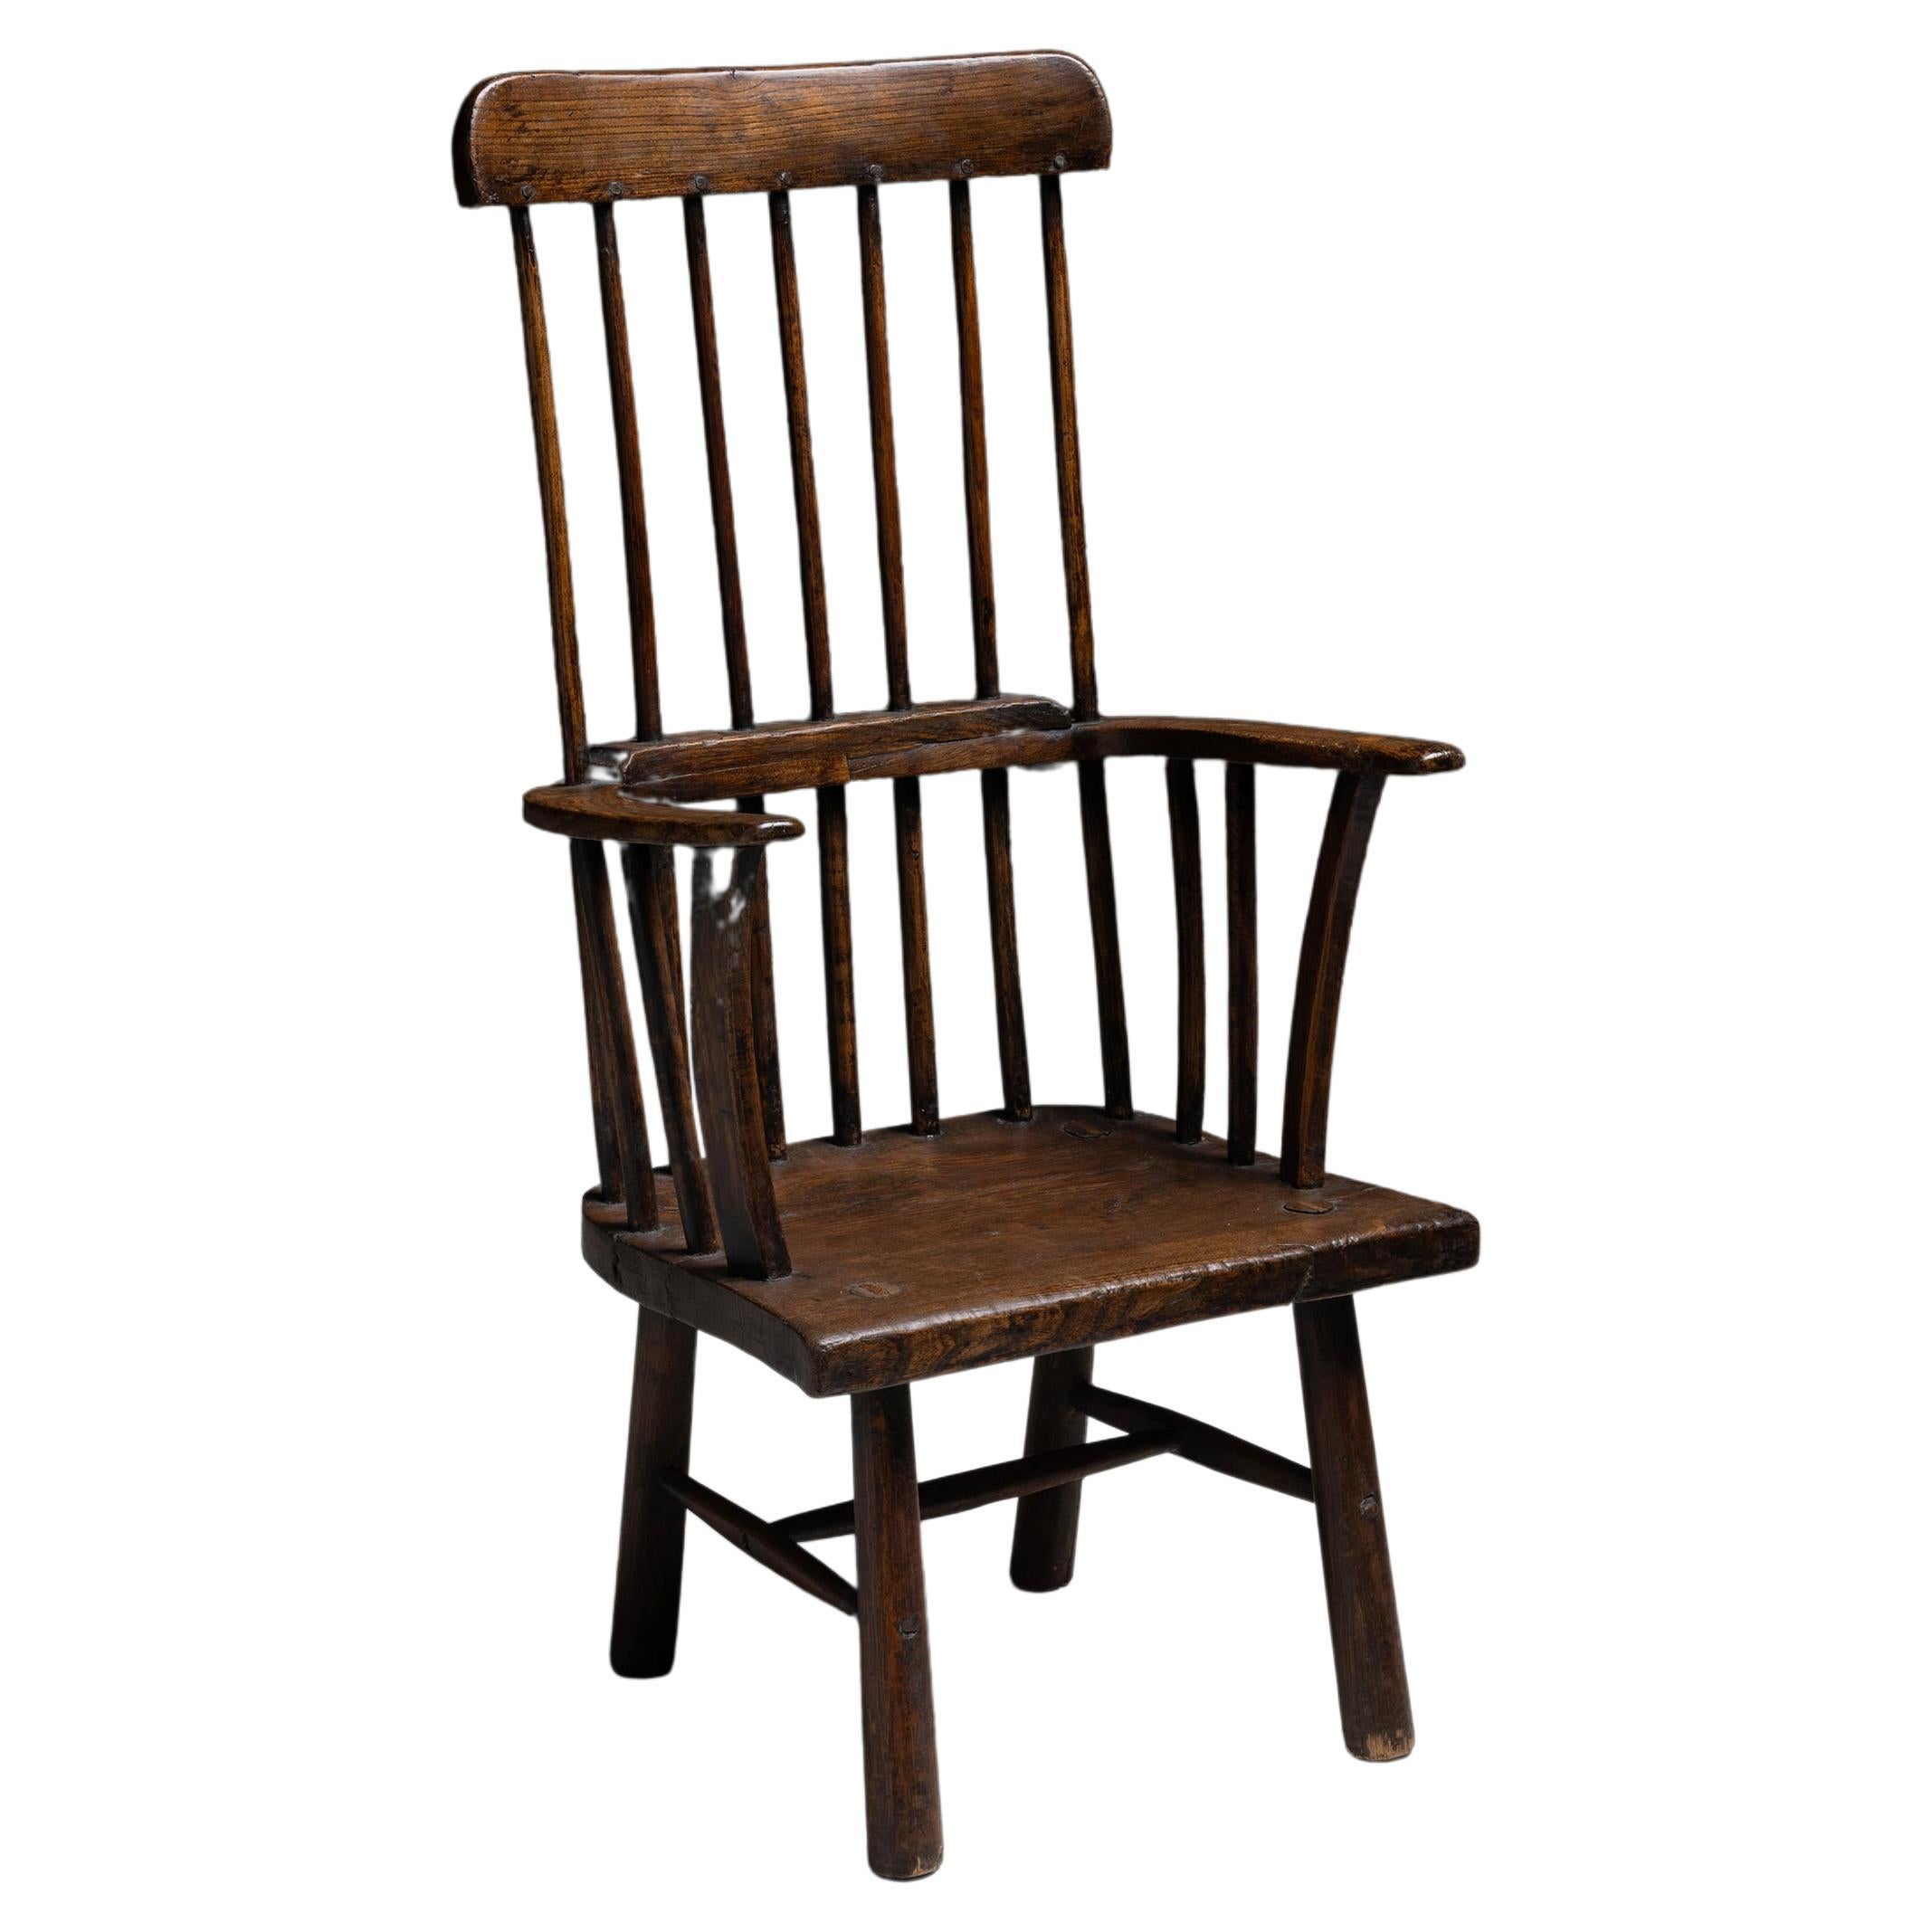 Elm Windsor Chair, England circa 1840